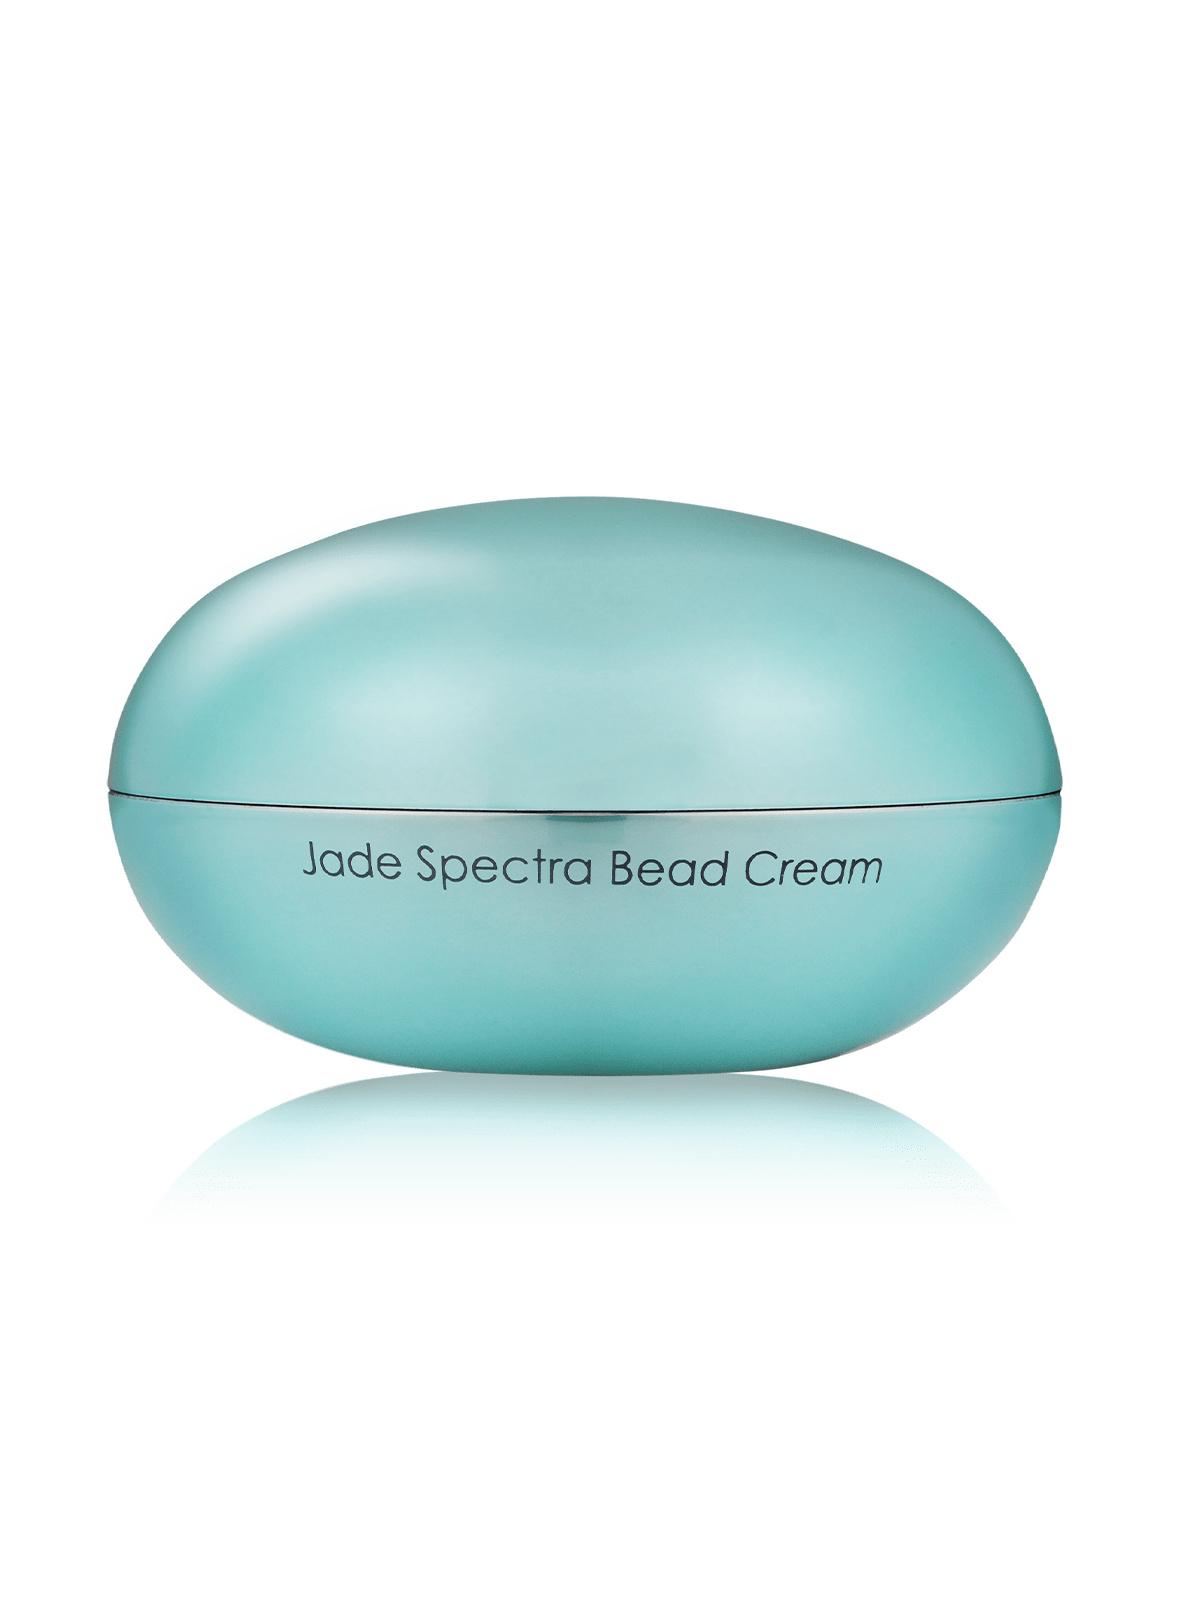 Jade Spectra Bead Cream back